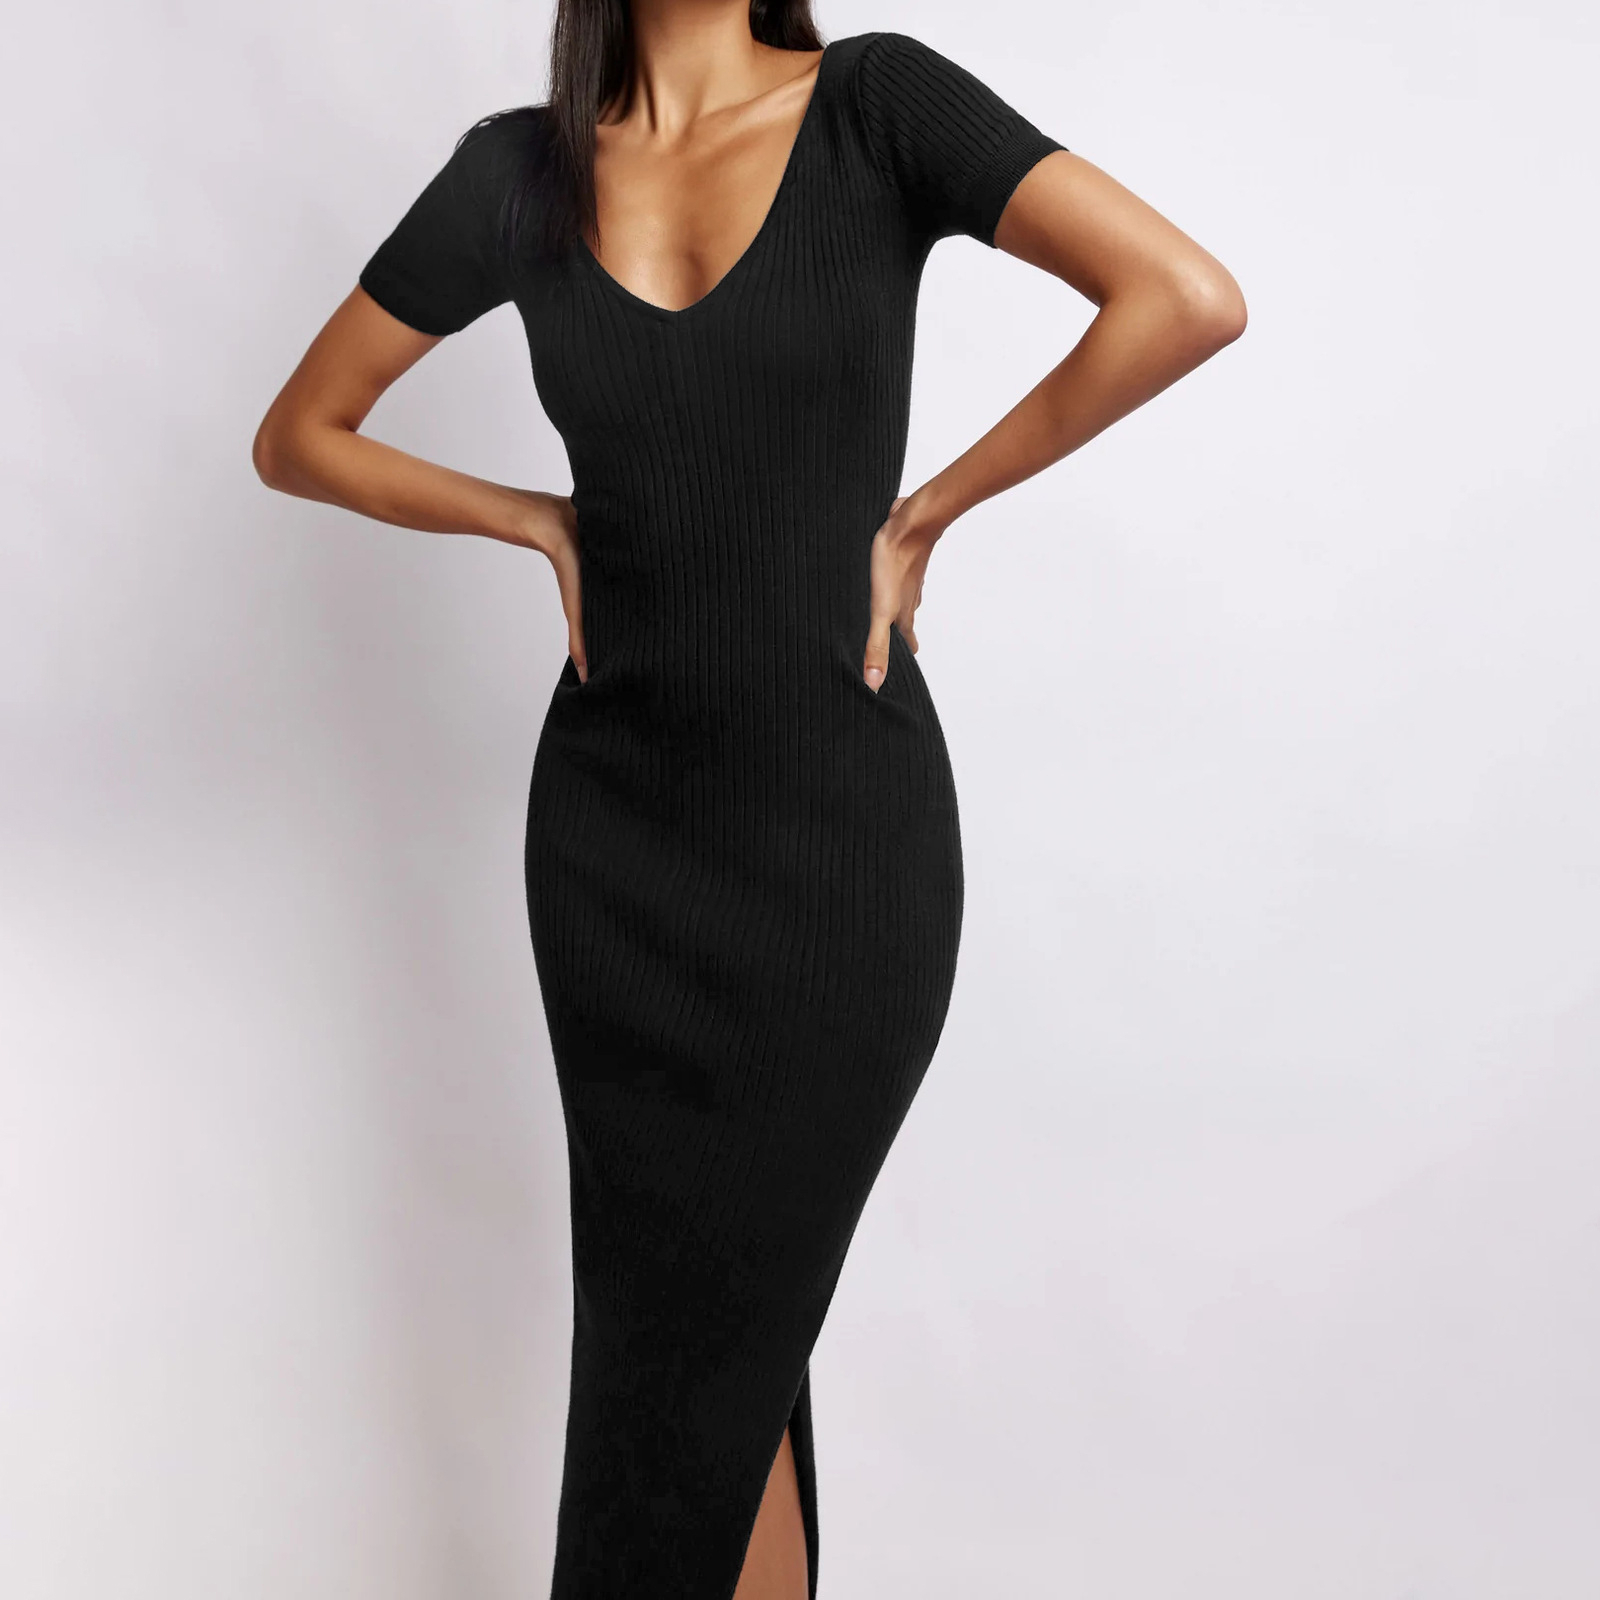 Sexy Women's V-neck Tight-fitting Split Skirt - Black, Small